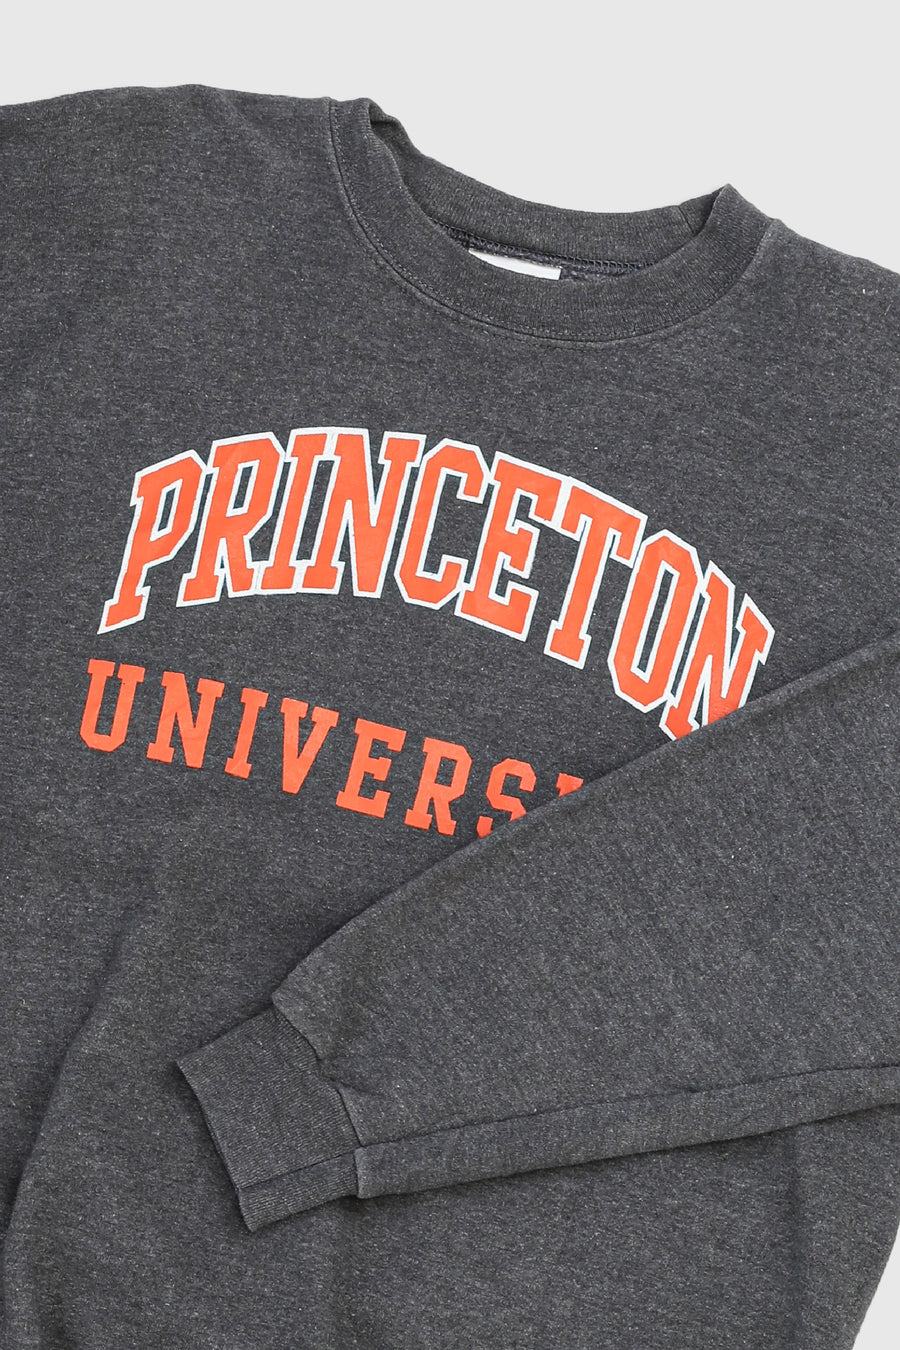 Vintage Princeton University Sweatshirt - M